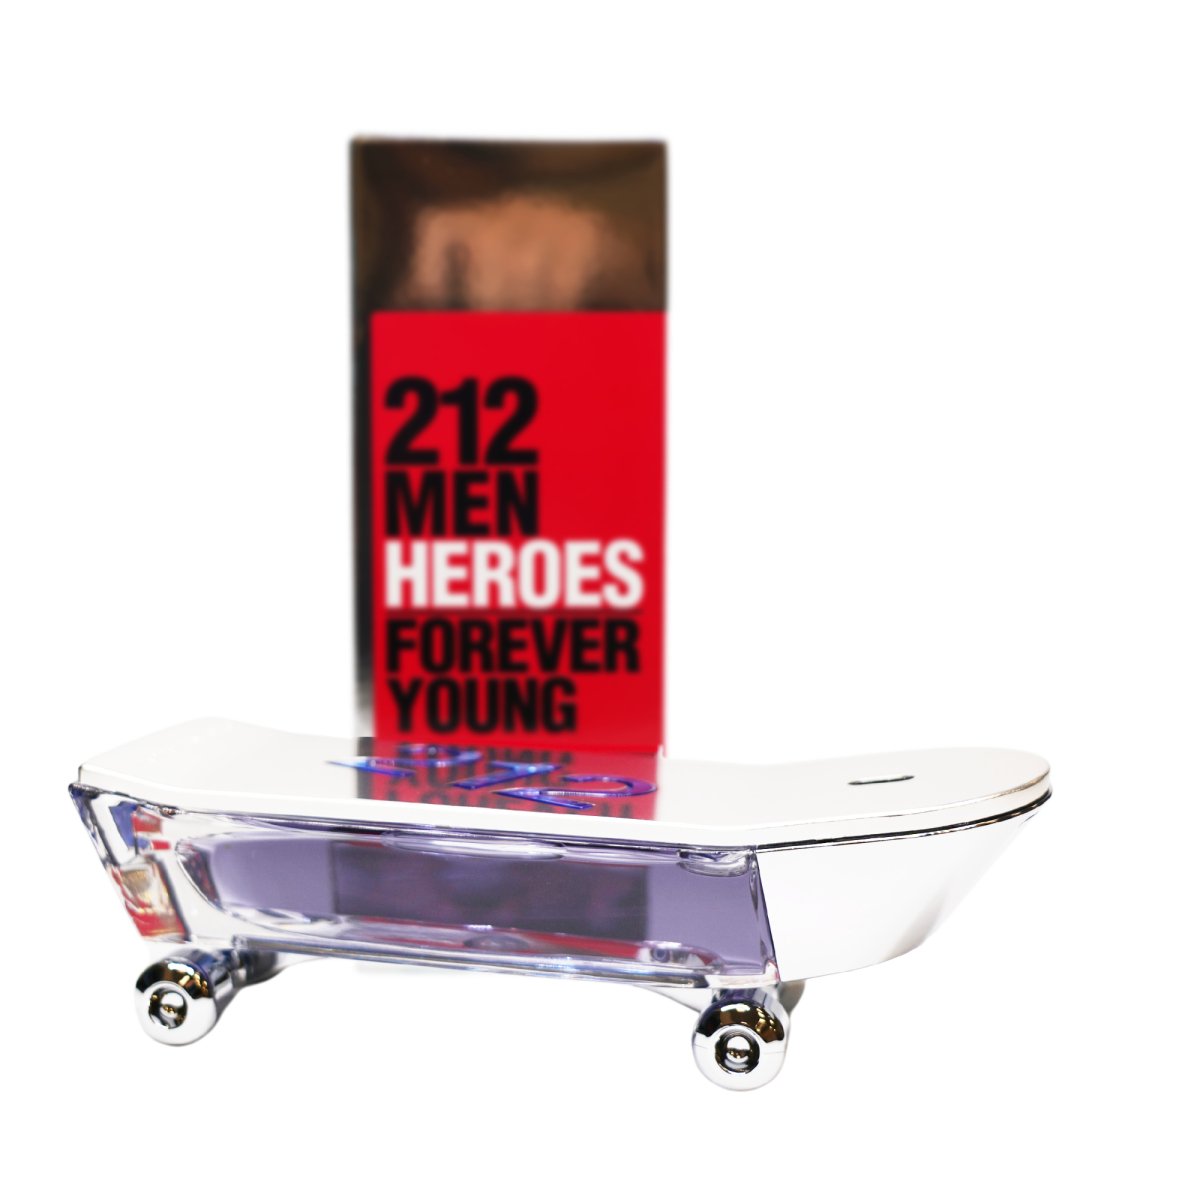 Carolina Herrera 212 Heroes Forever Young for Men Eau de Toilette Spray - Perfume Headquarters - Carolina Herrera - Fragrance